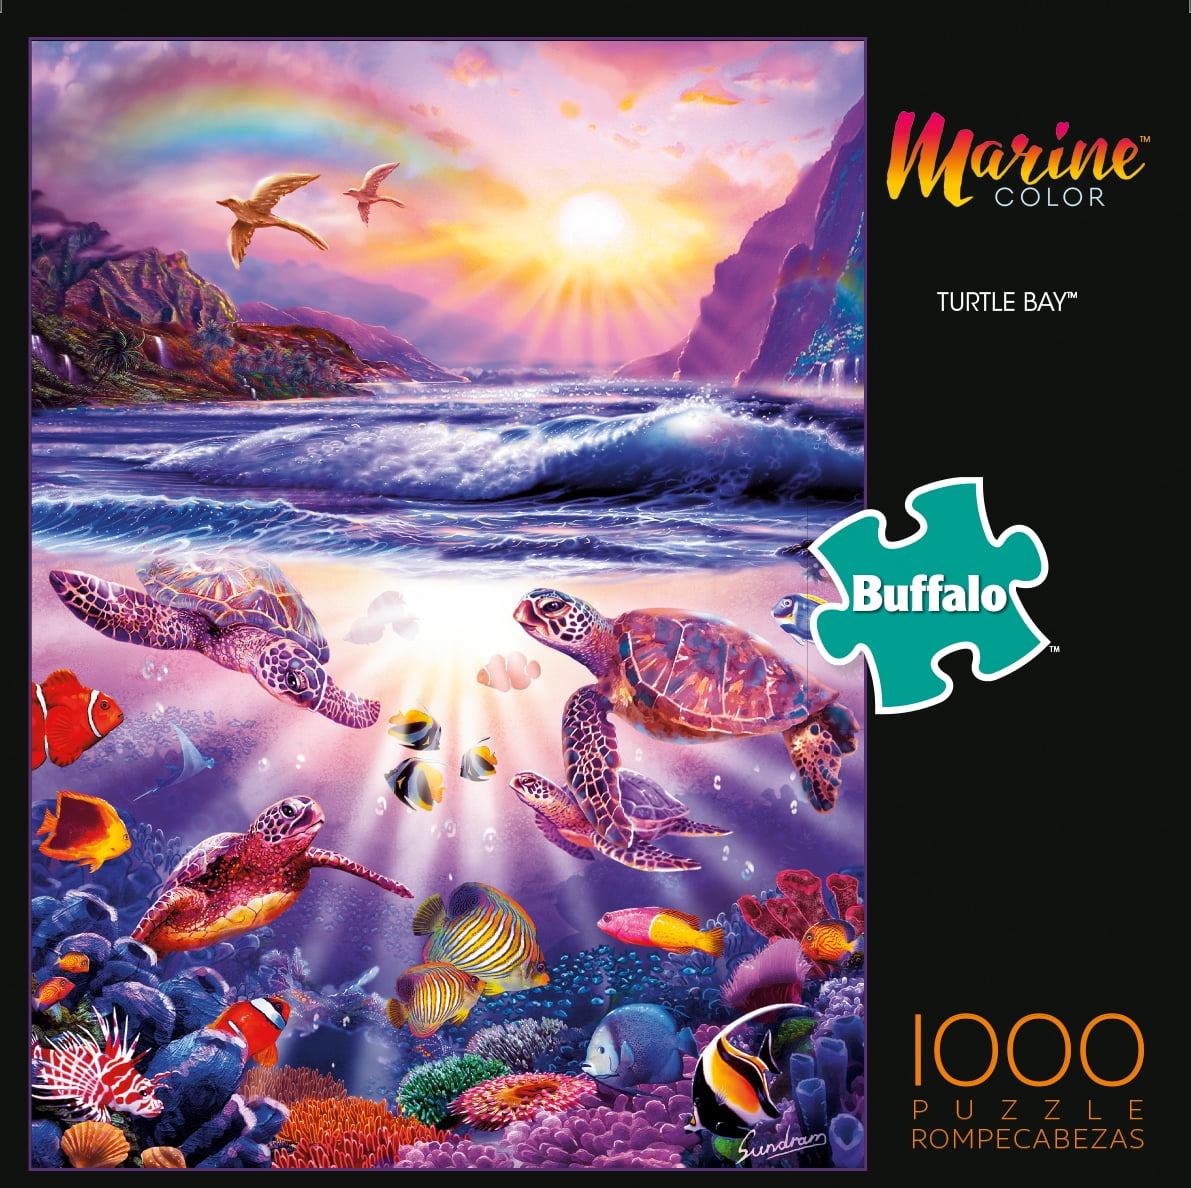 1000 piece Marine Color: Turtle Bay jigsaw puzzle